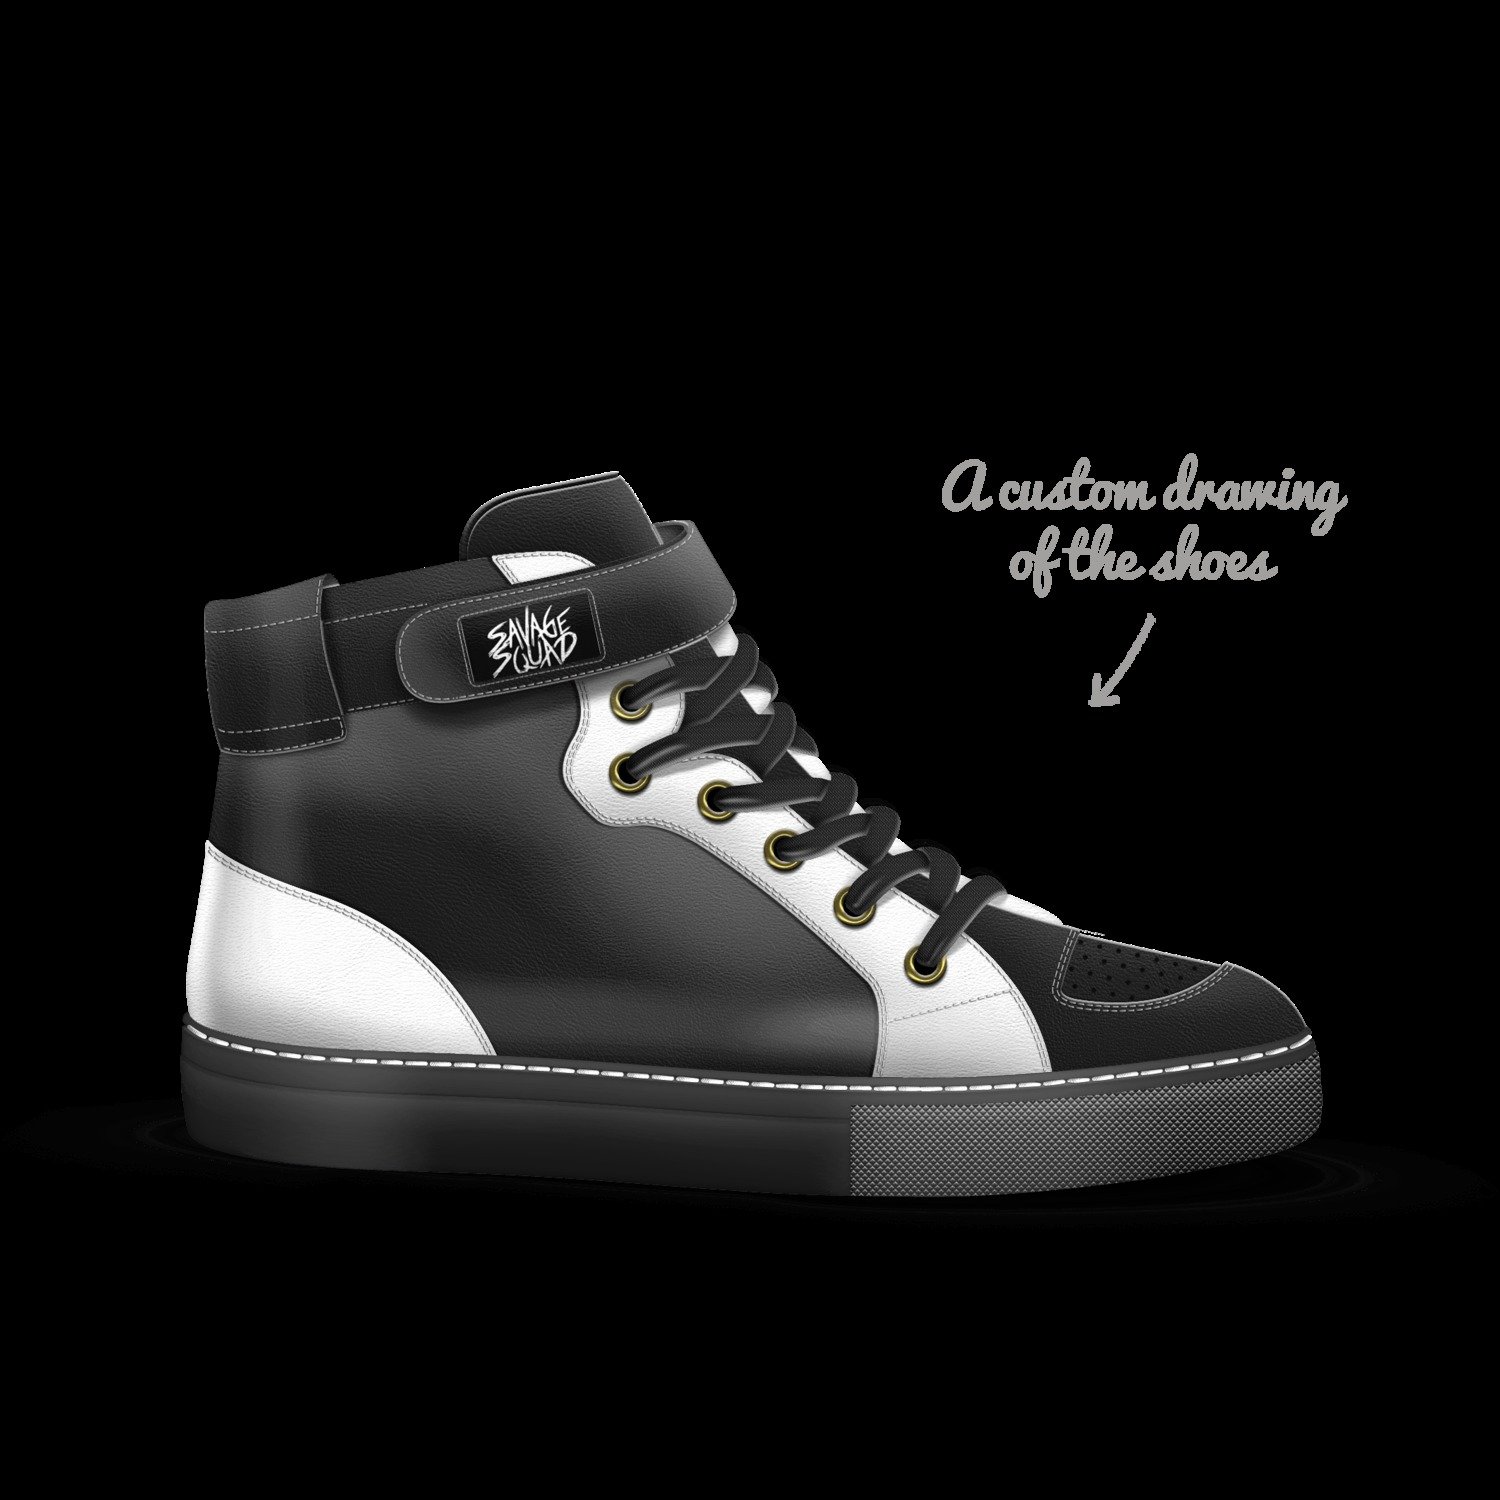 A Custom Shoe concept by Tony Lopez